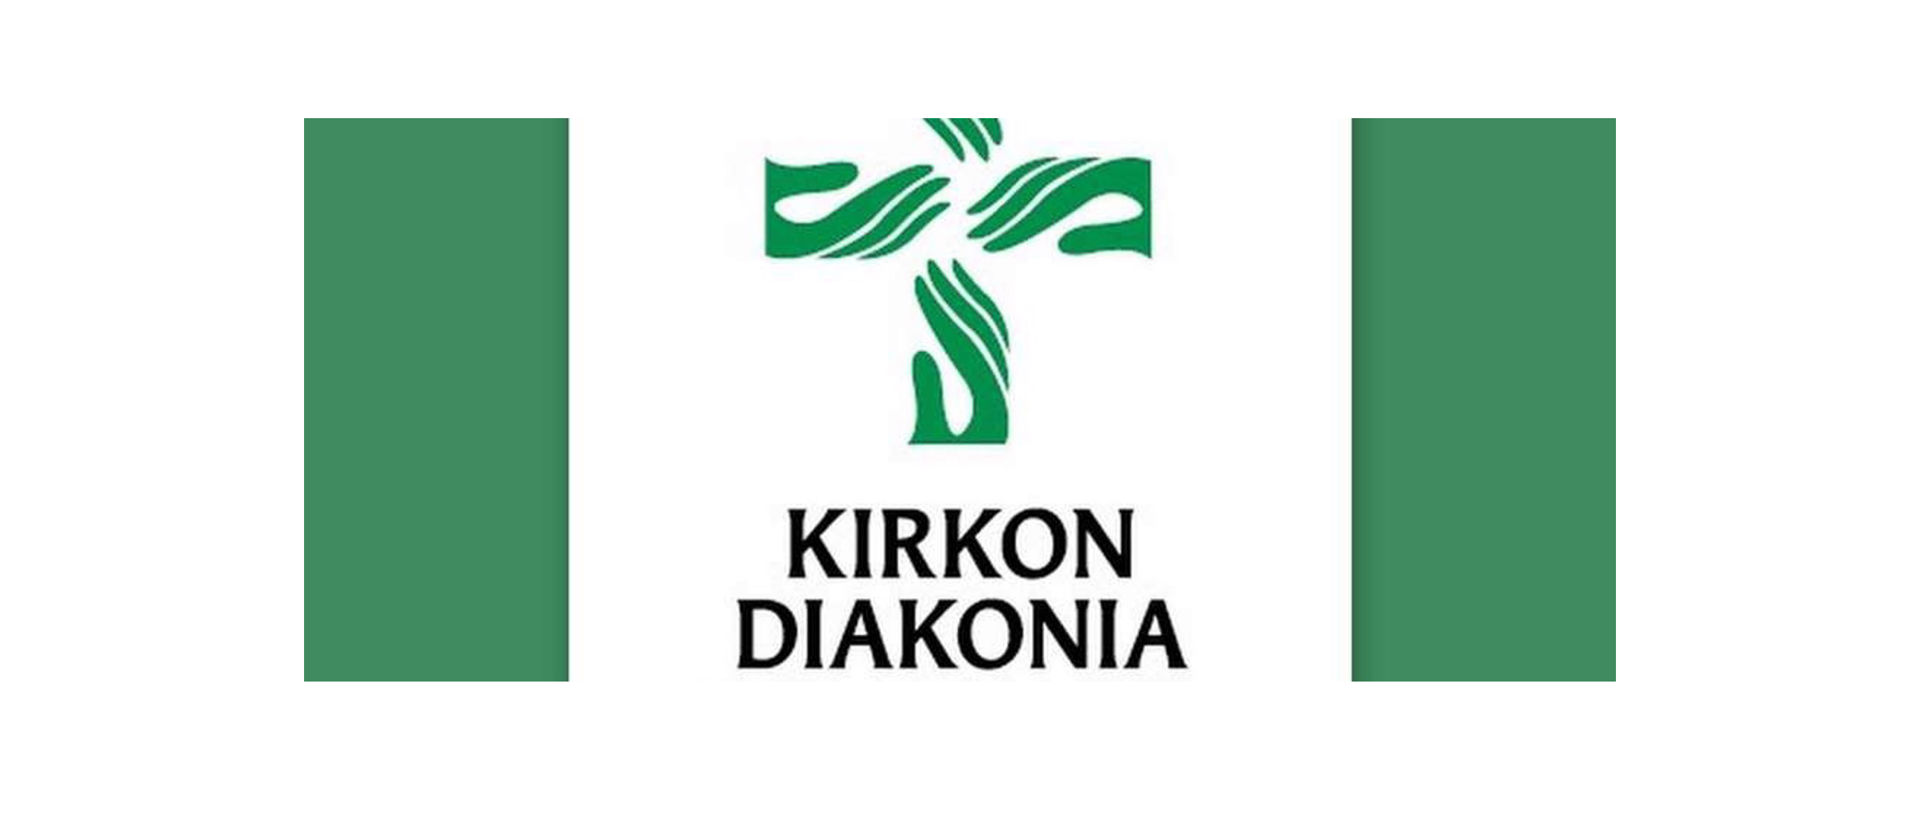 Kirkon diagonia-logo